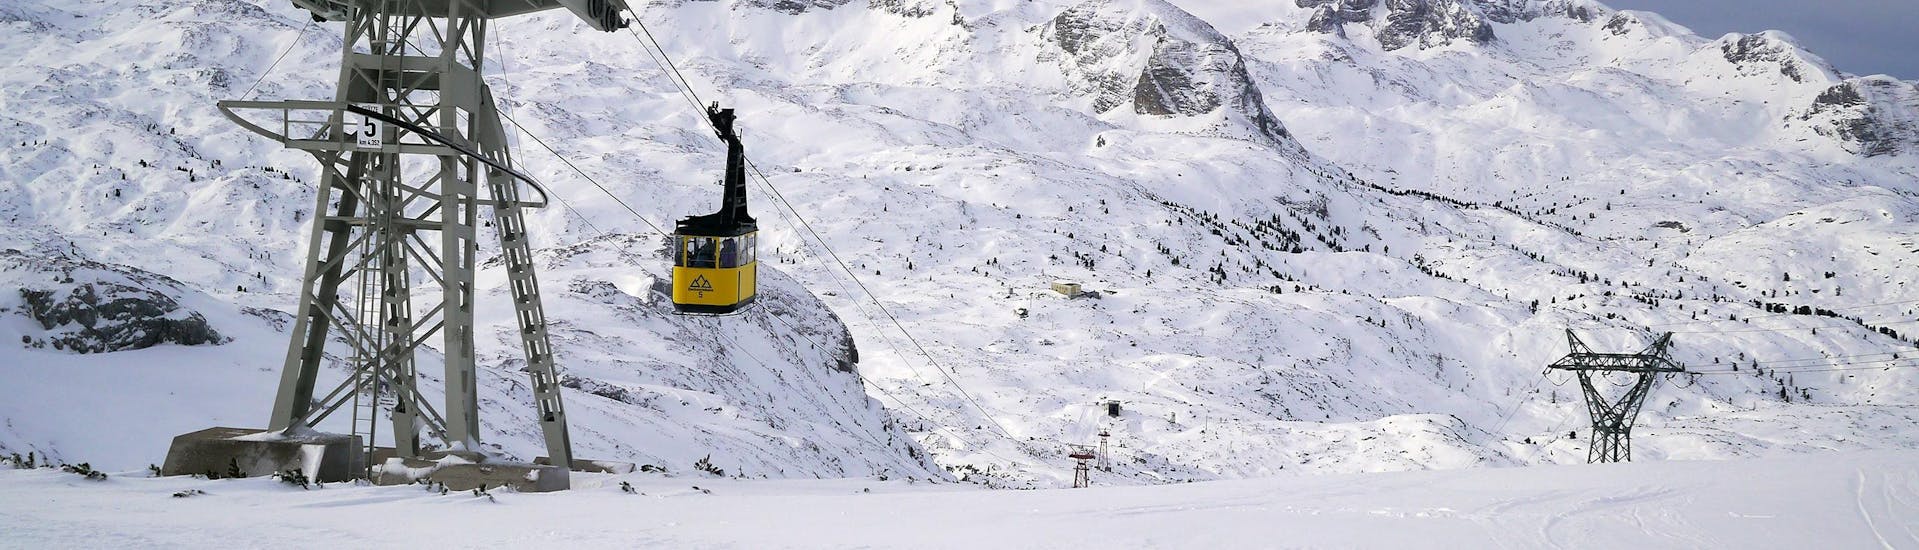 View of the gondola in the snowy Dachstein Krippenstein ski area, where local ski schools offer their ski courses.